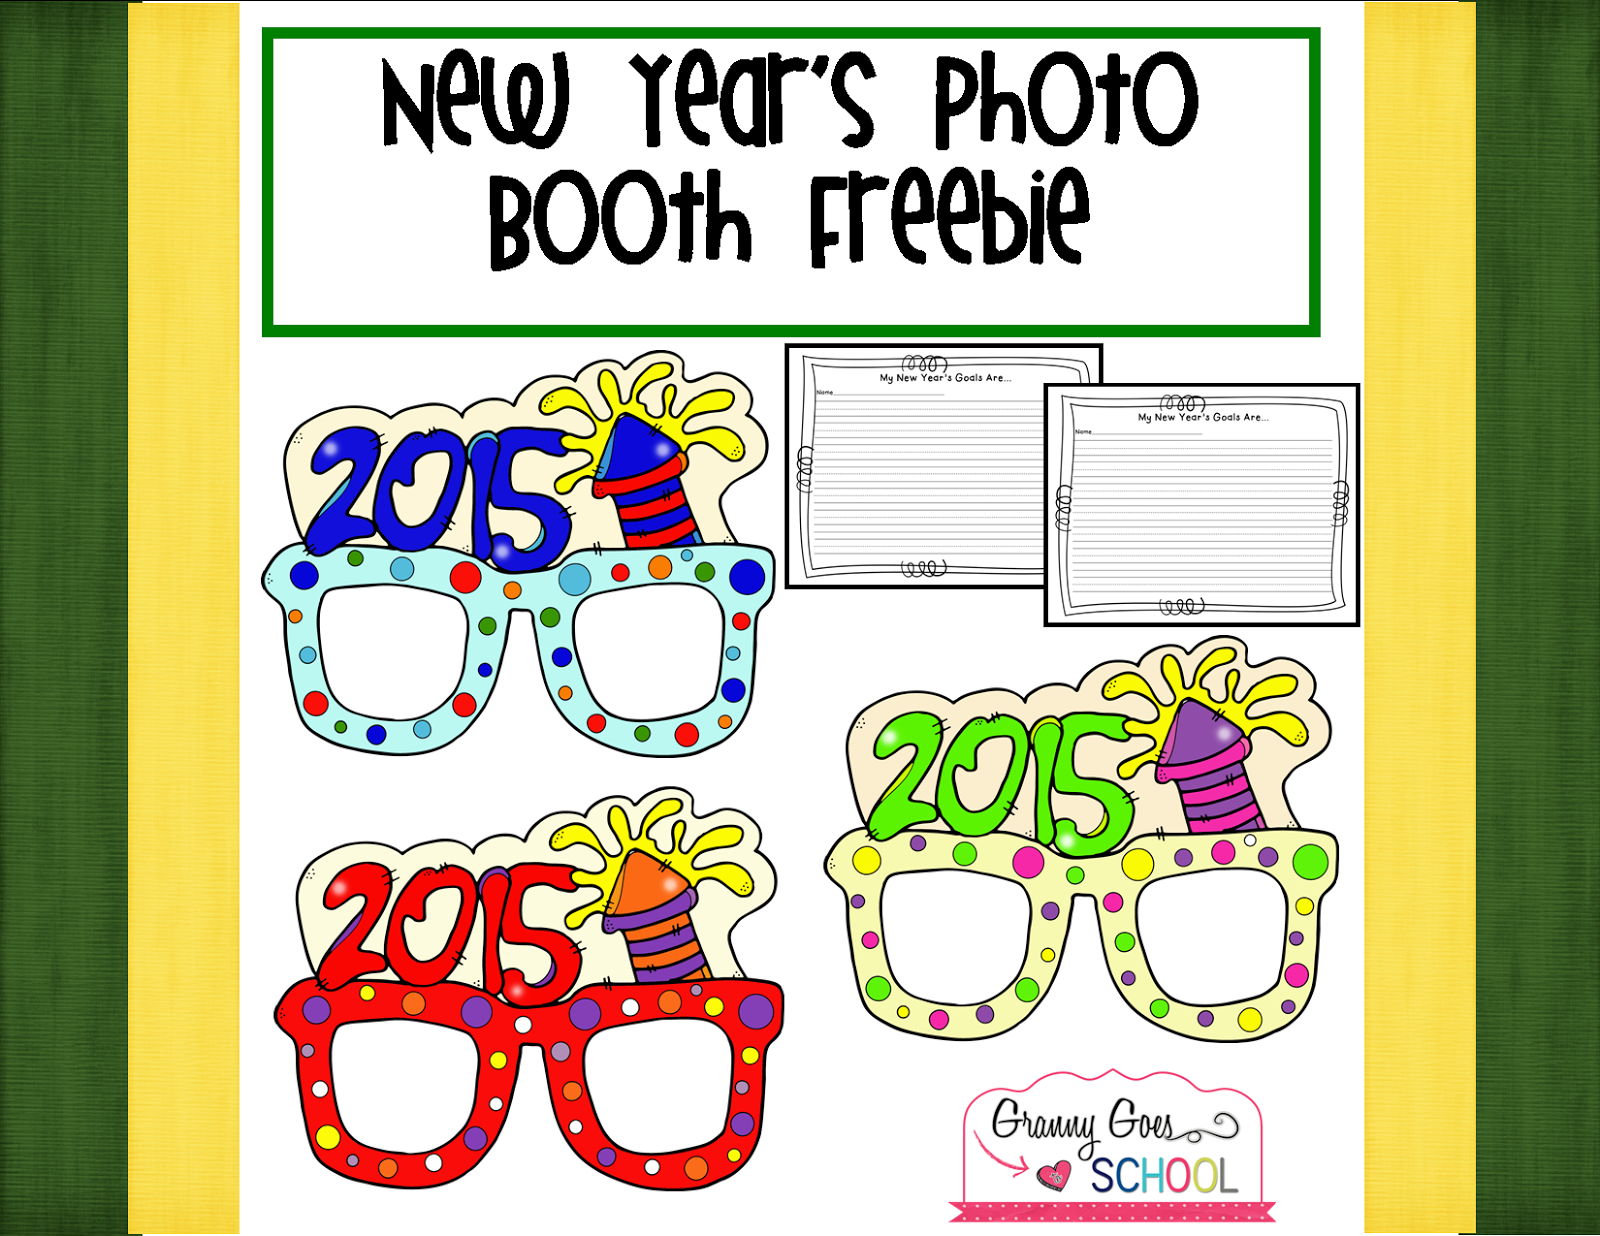 http://www.teacherspayteachers.com/Product/New-Years-Photo-Booth-Freebie-1604226